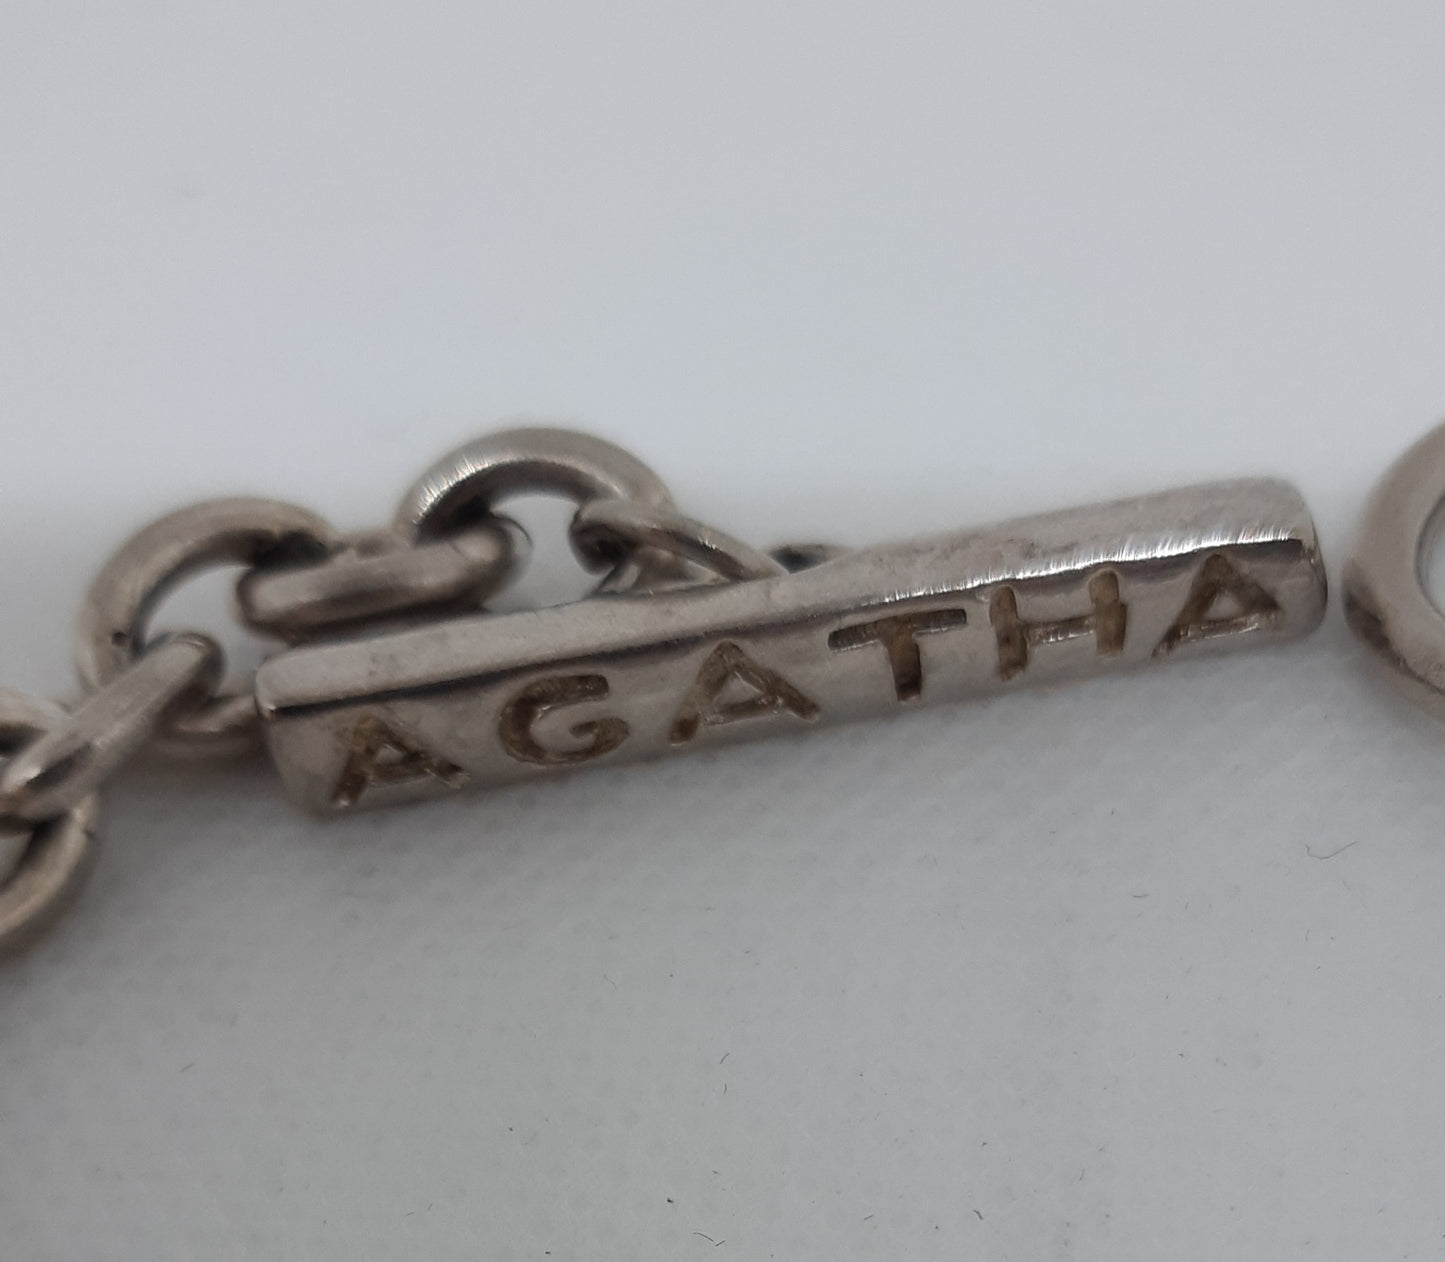 Bracelet AGATHA 23-882